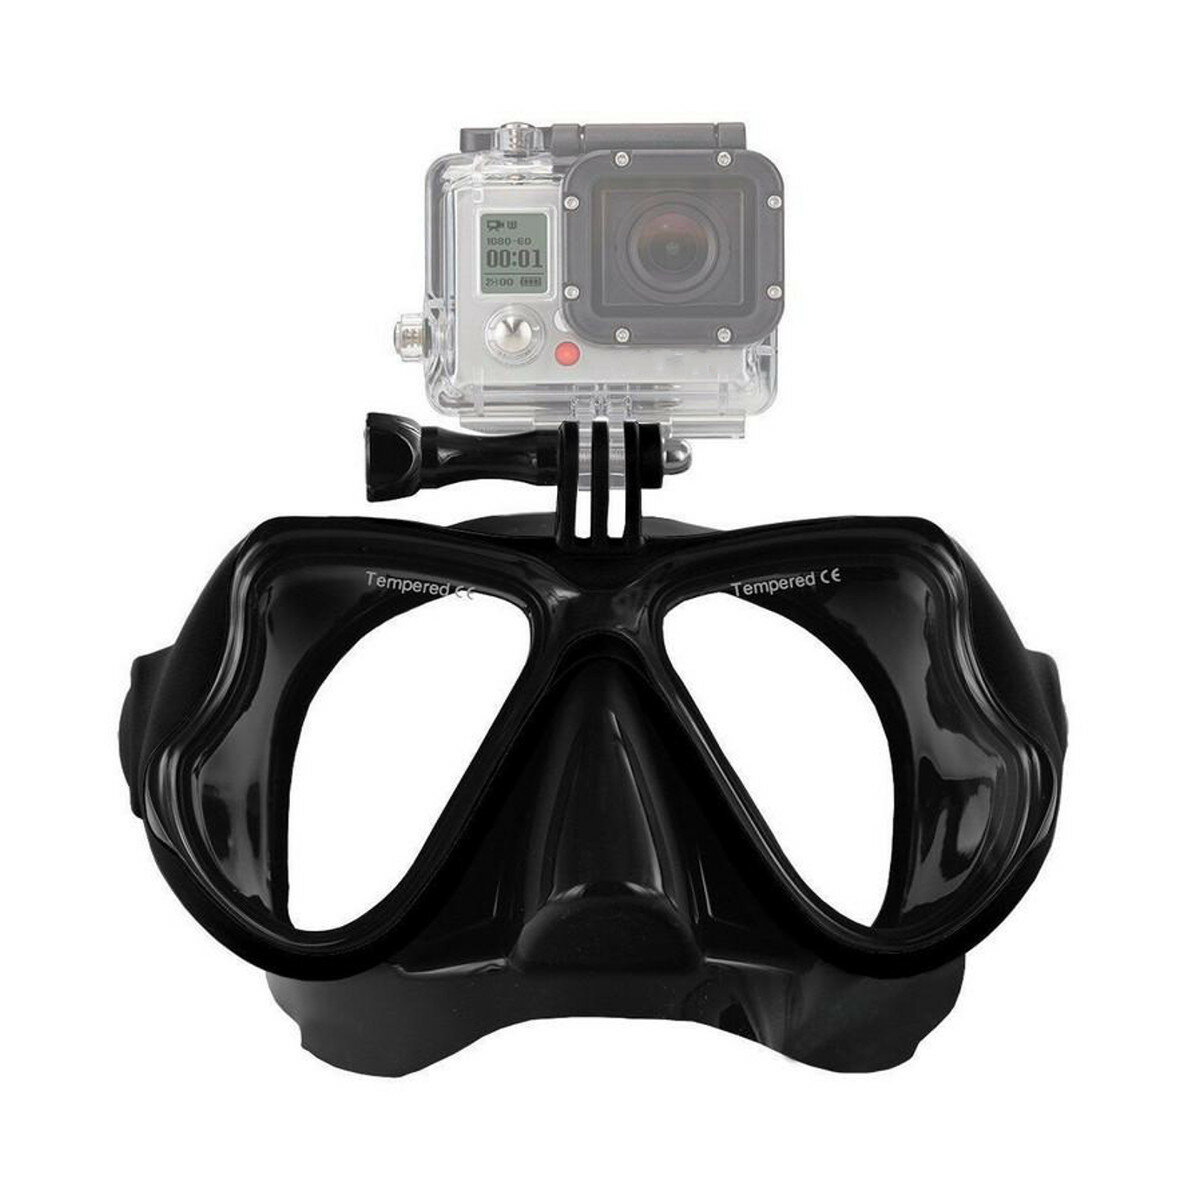 2018 Global Selected Snorkel Mask with Camera Mount BROGEND 